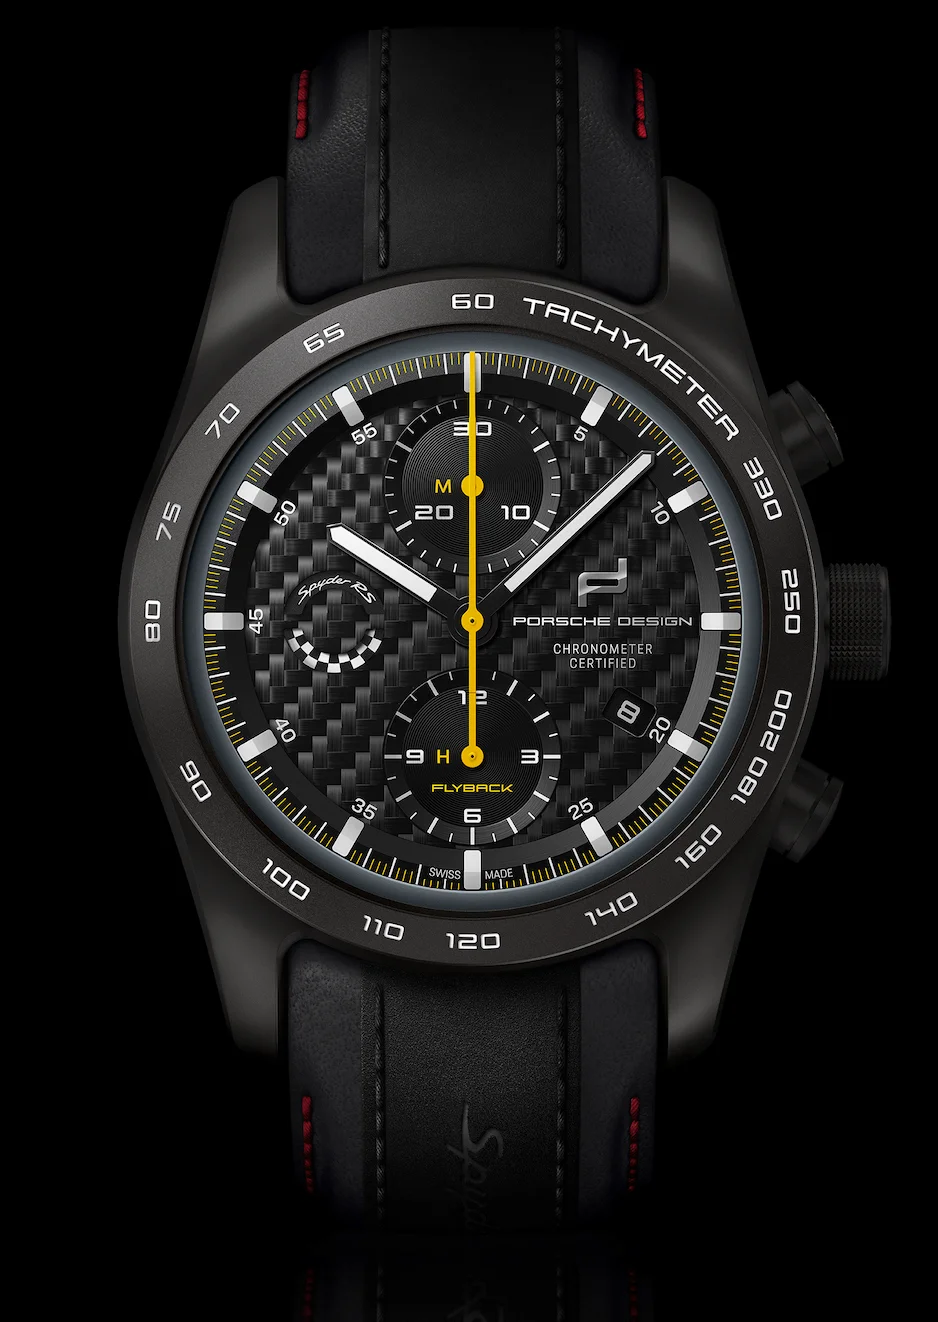 Boxster watch watchband needed | Planet-9 Porsche Forum